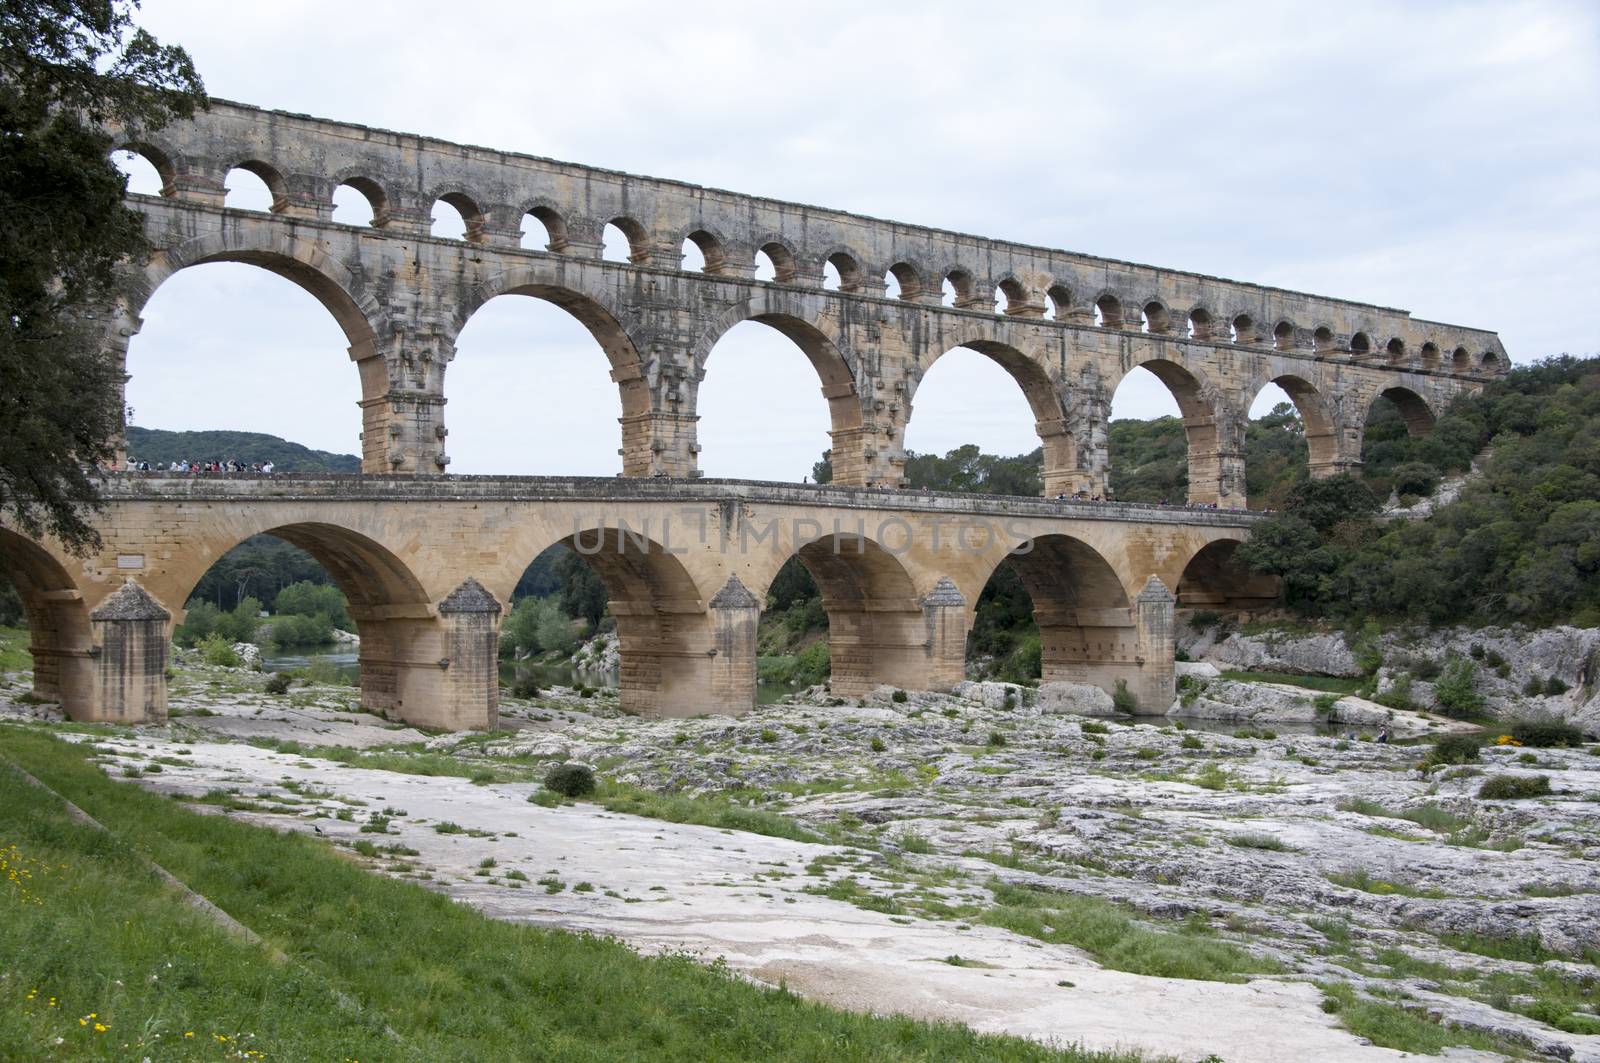 Pont du Gard, old Roman aqueduct, southern France near Nimes